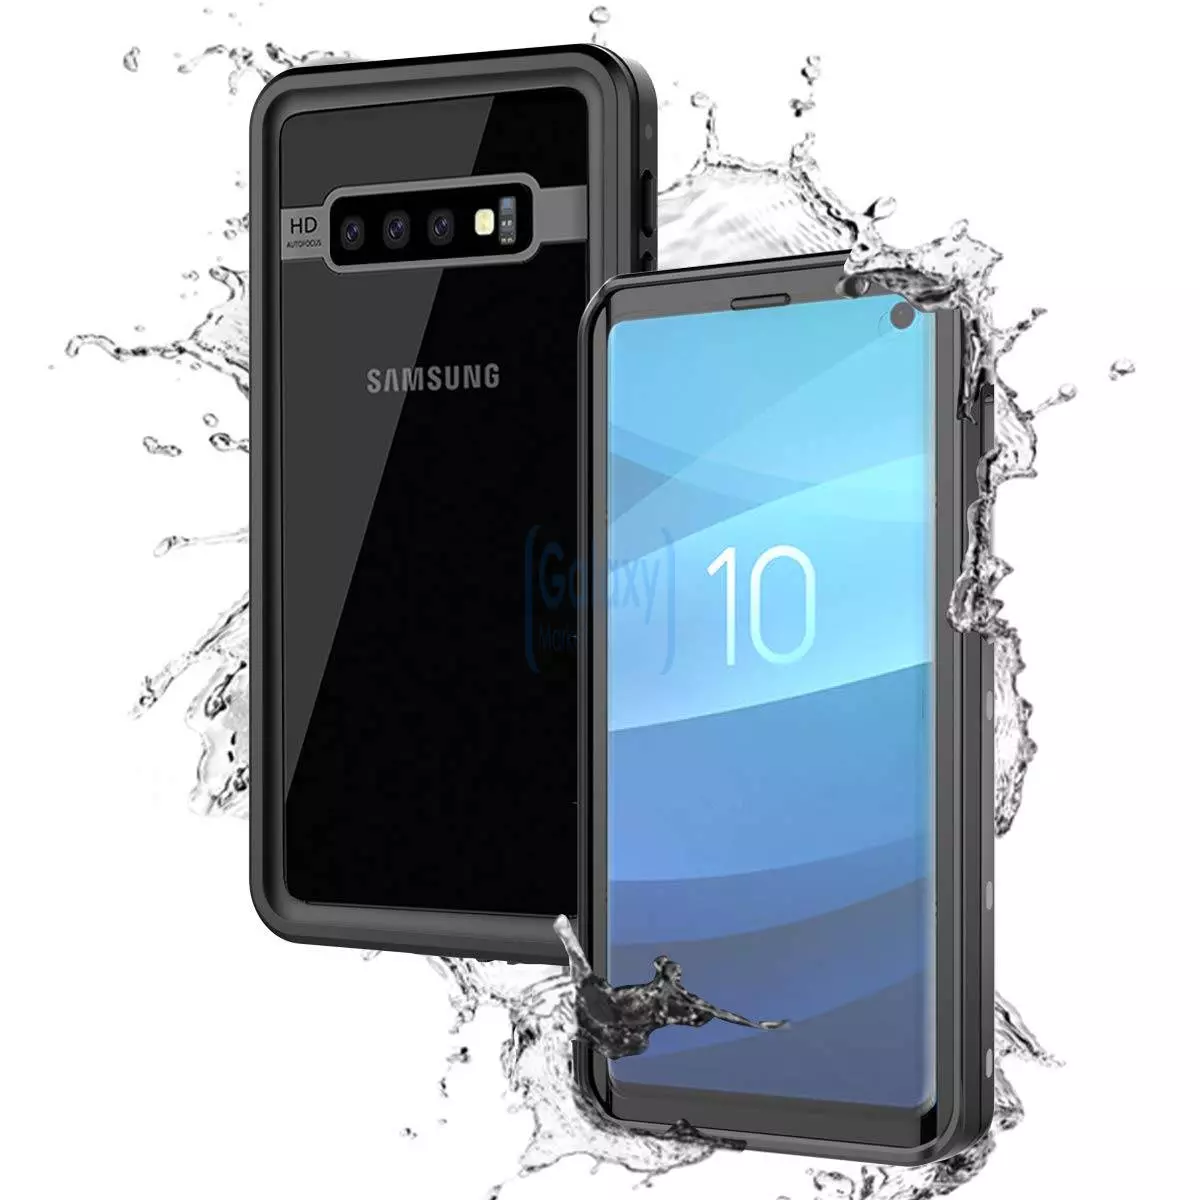 Водонепроницаемый чехол Anomaly WaterProof Case для Samsung Galaxy S10 Plus Black (Черный)